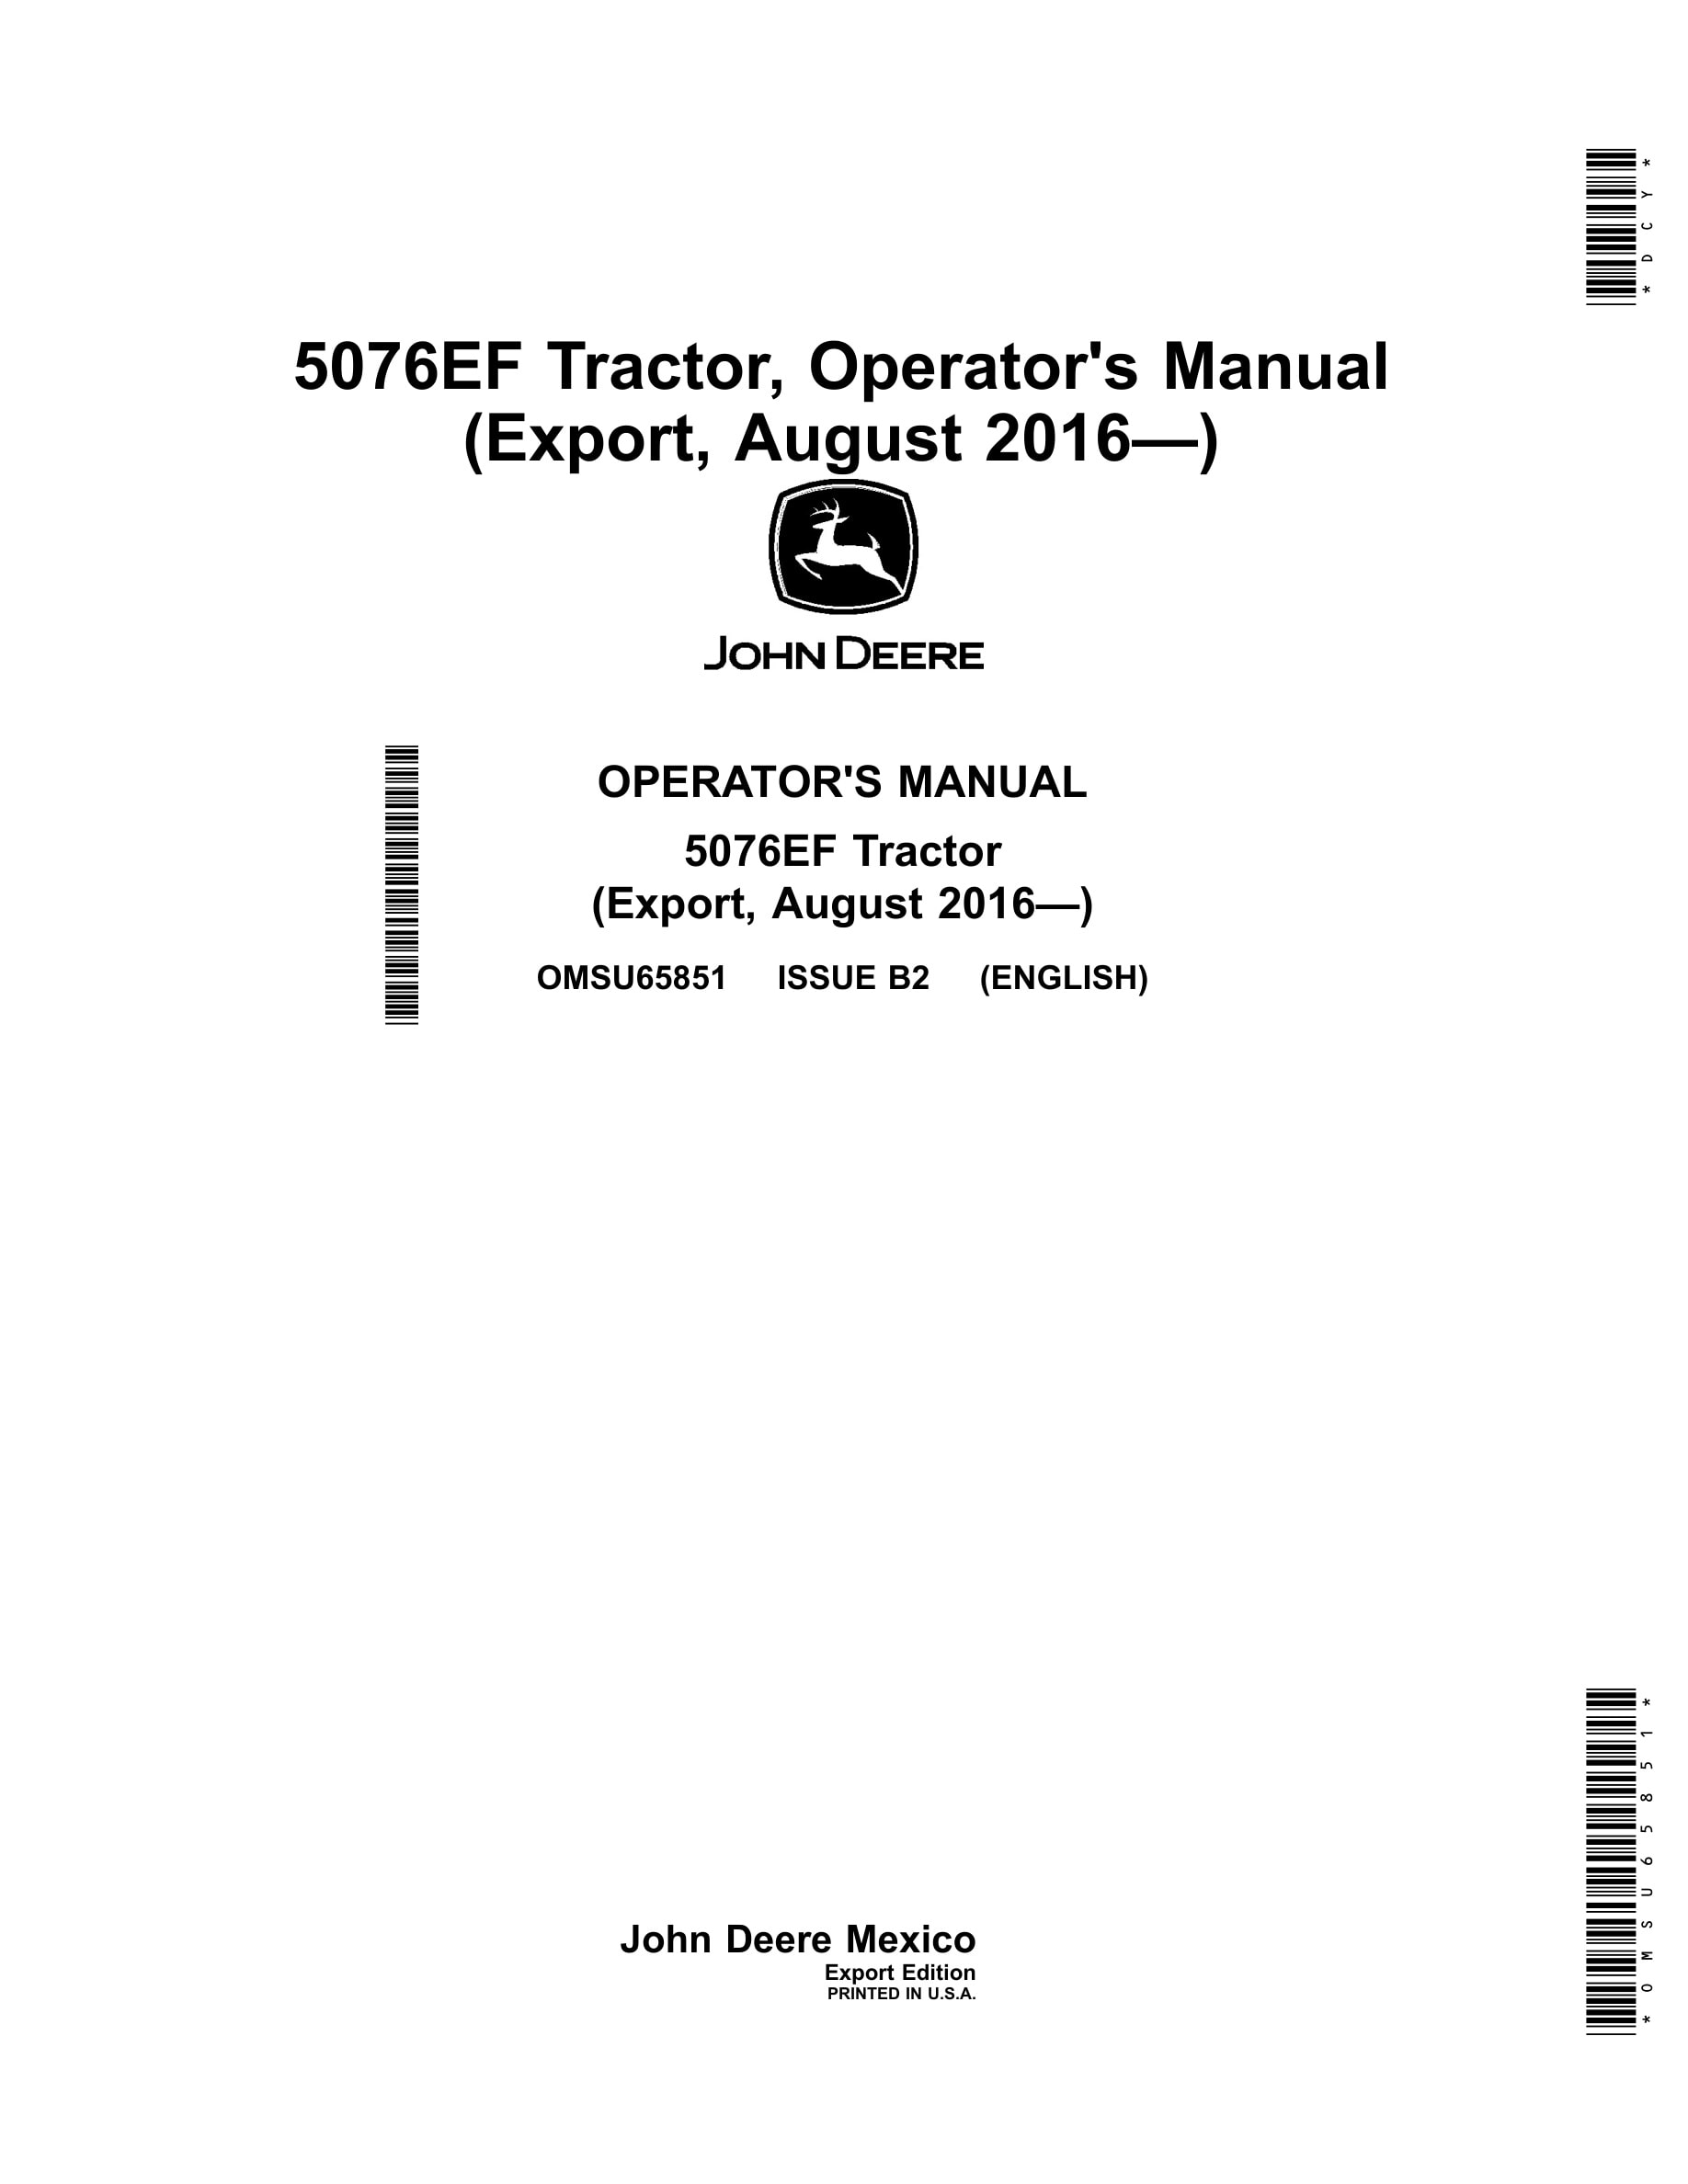 John Deere 5076ef Tractors Operator Manual OMSU65851-1